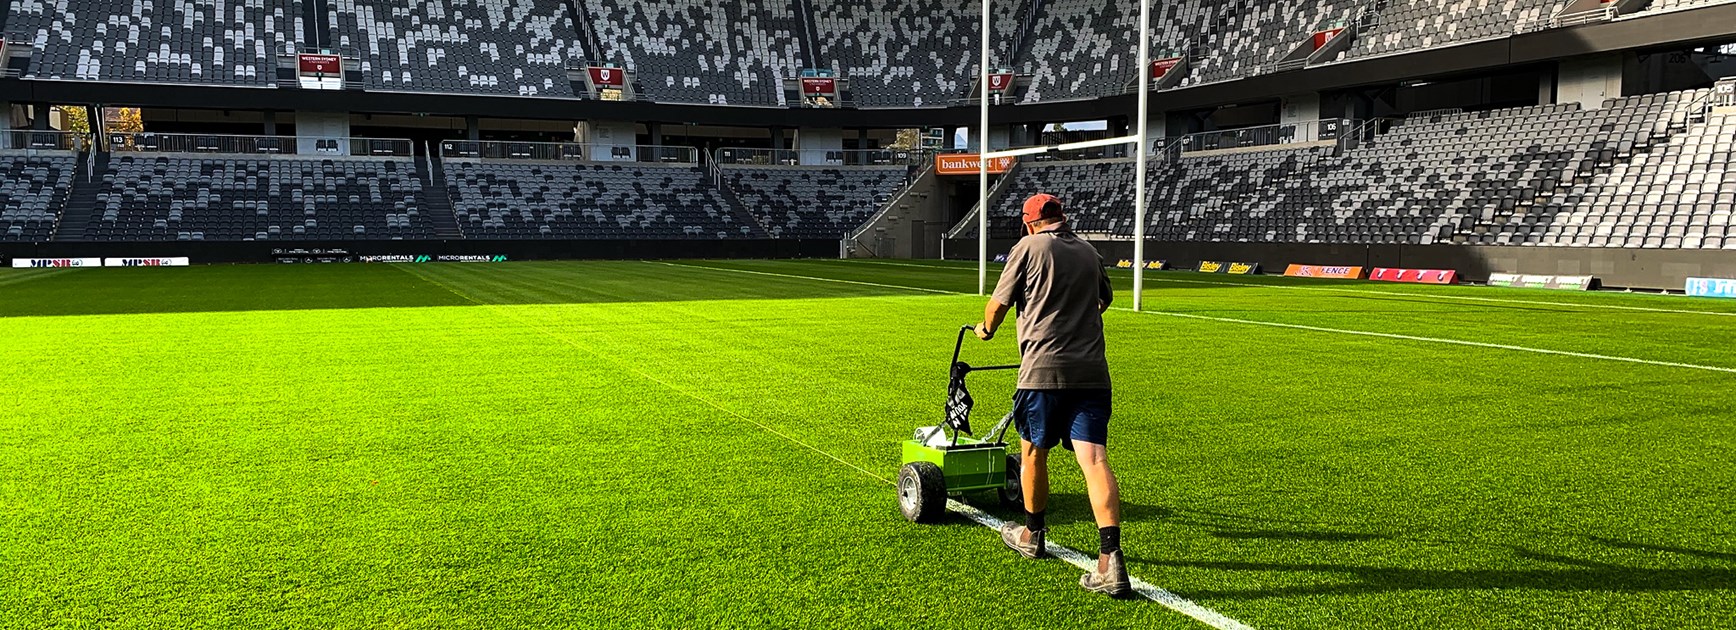 Grass at the cutting edge: Stadium turf treated like 'high-class athlete'